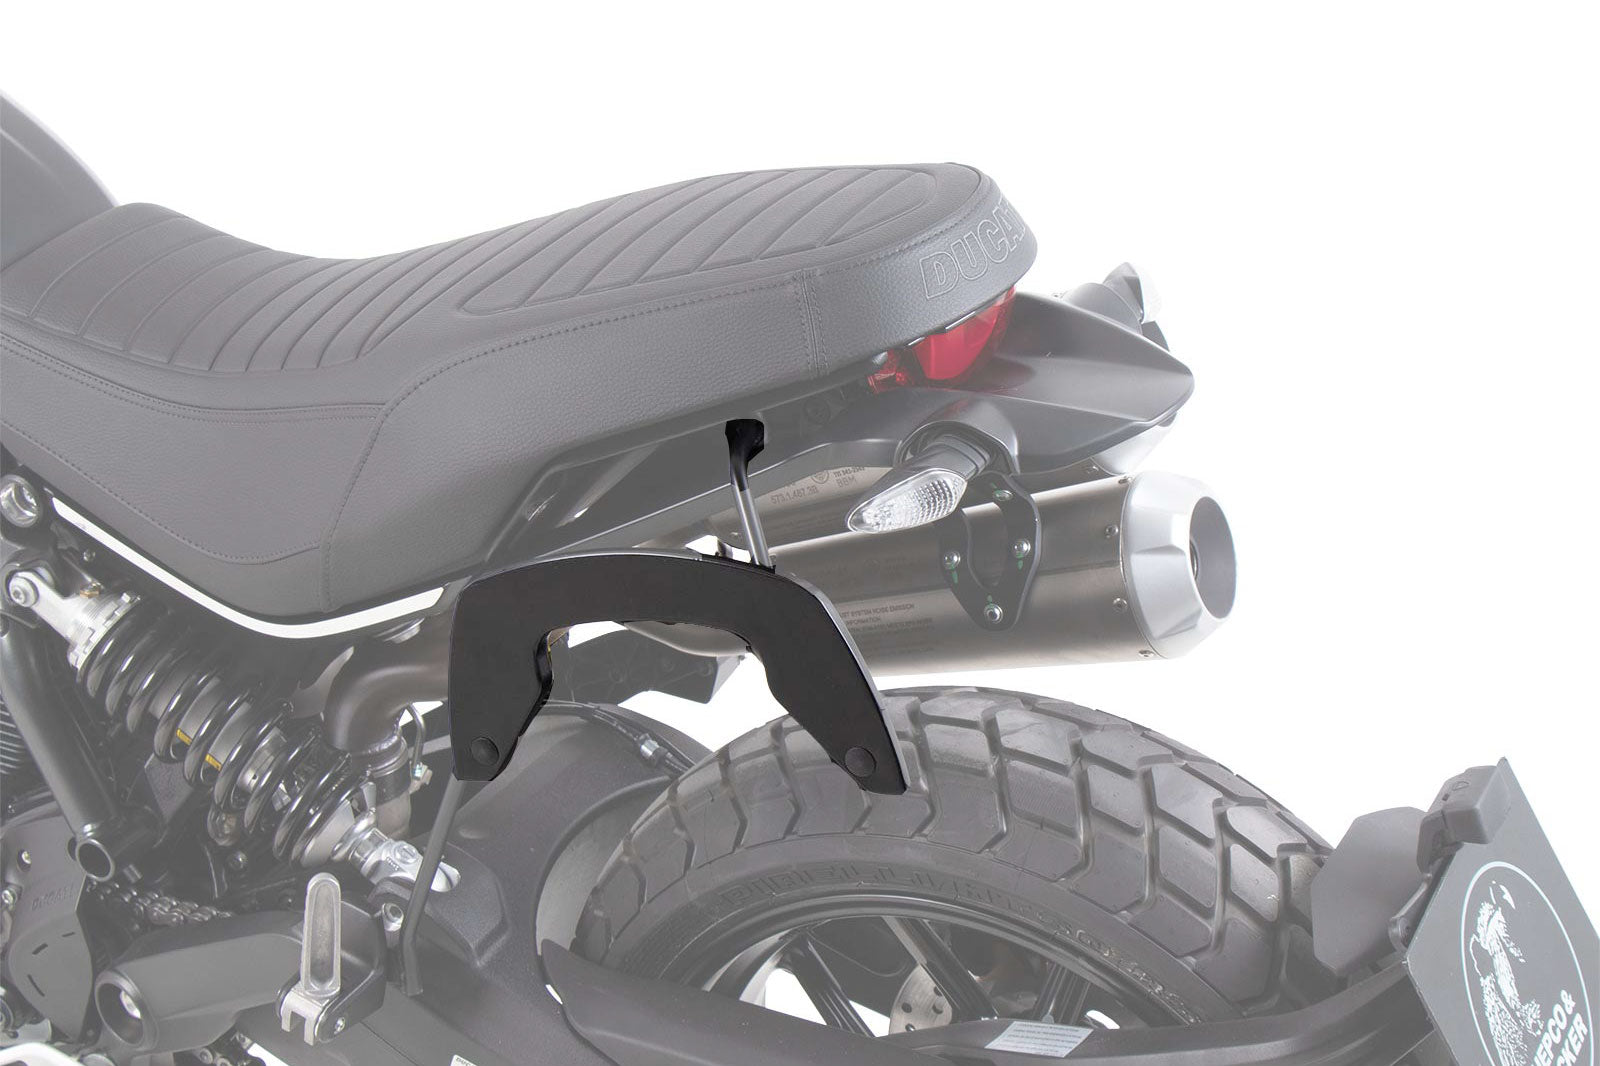 Ducati Scrambler 1100 Dark Pro Sidecases Carrier - C-Bow